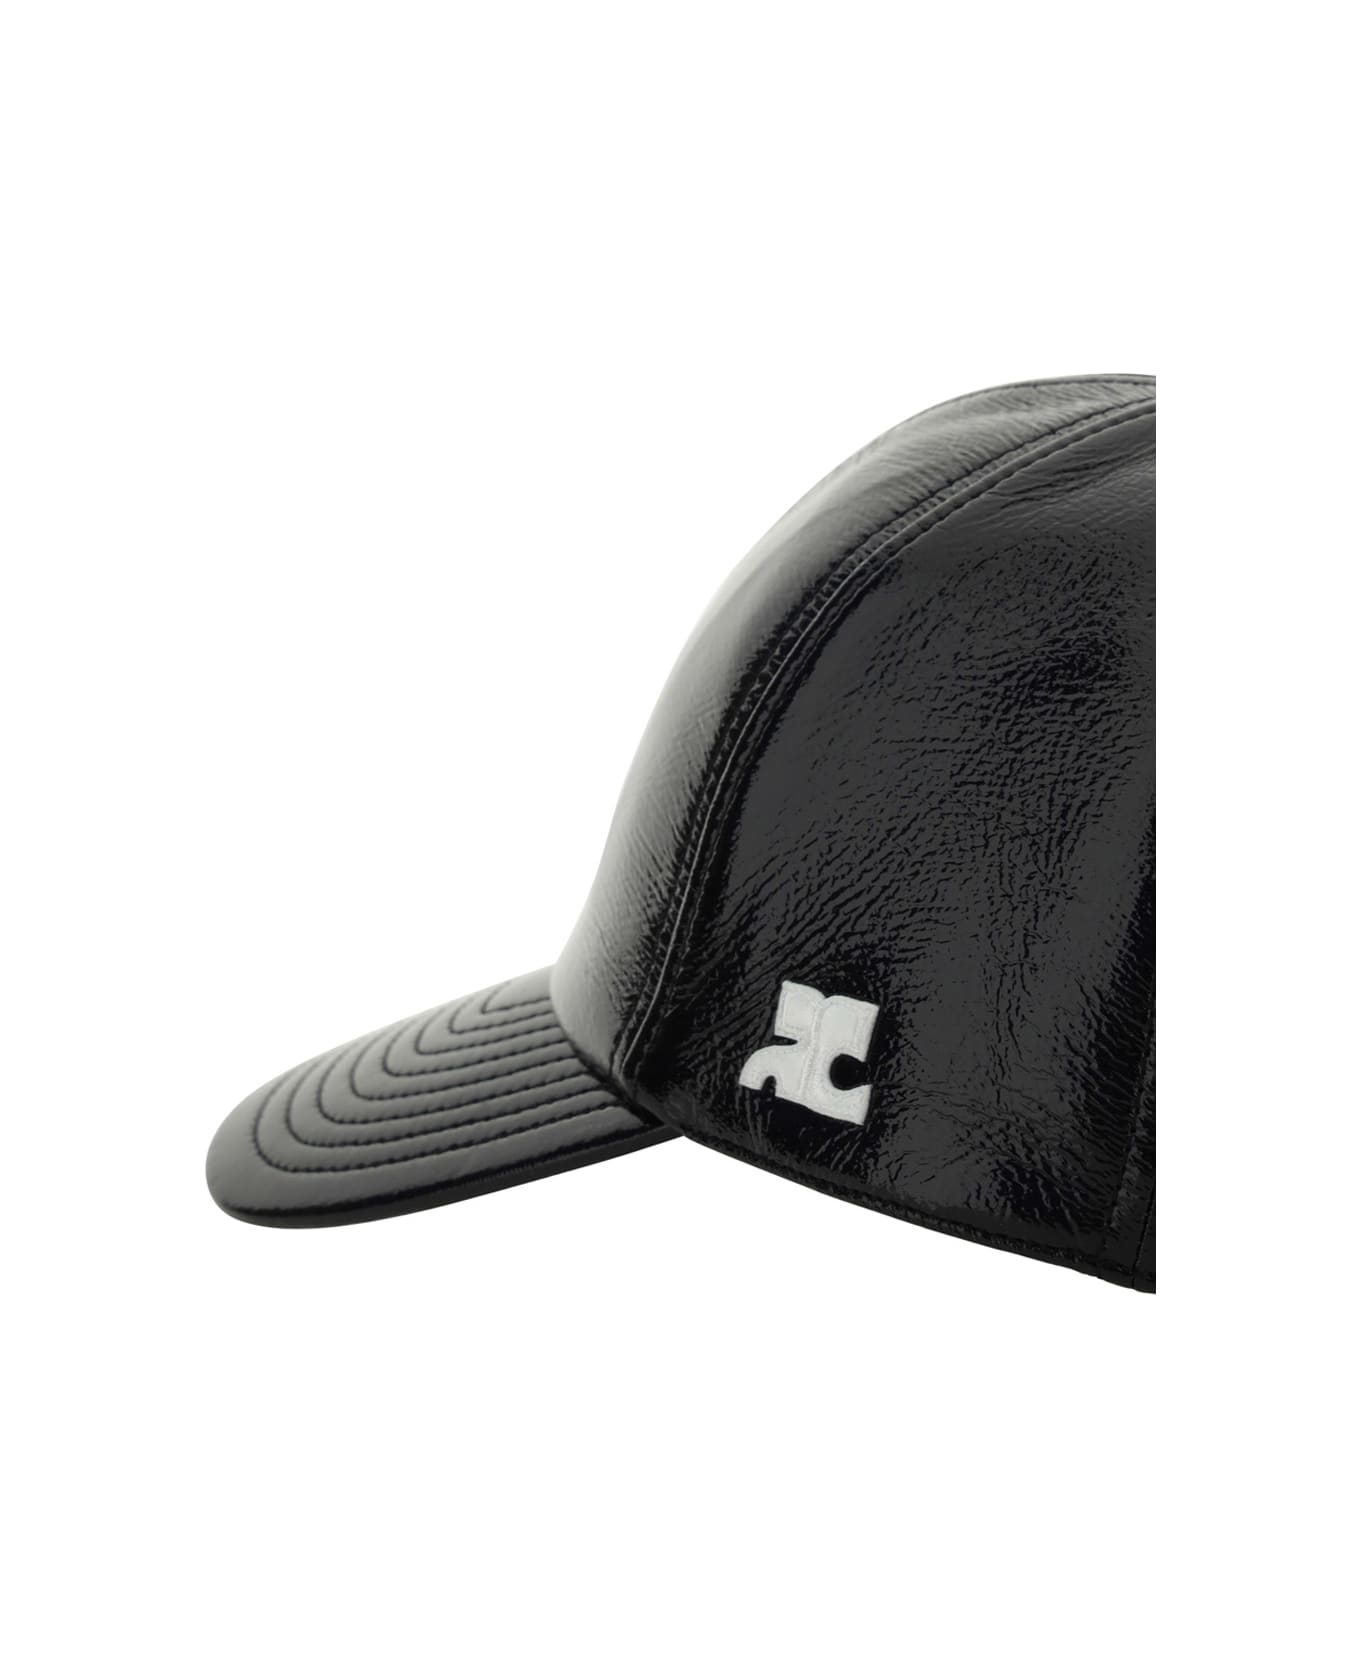 Courrèges Baseball Cap - Black 帽子